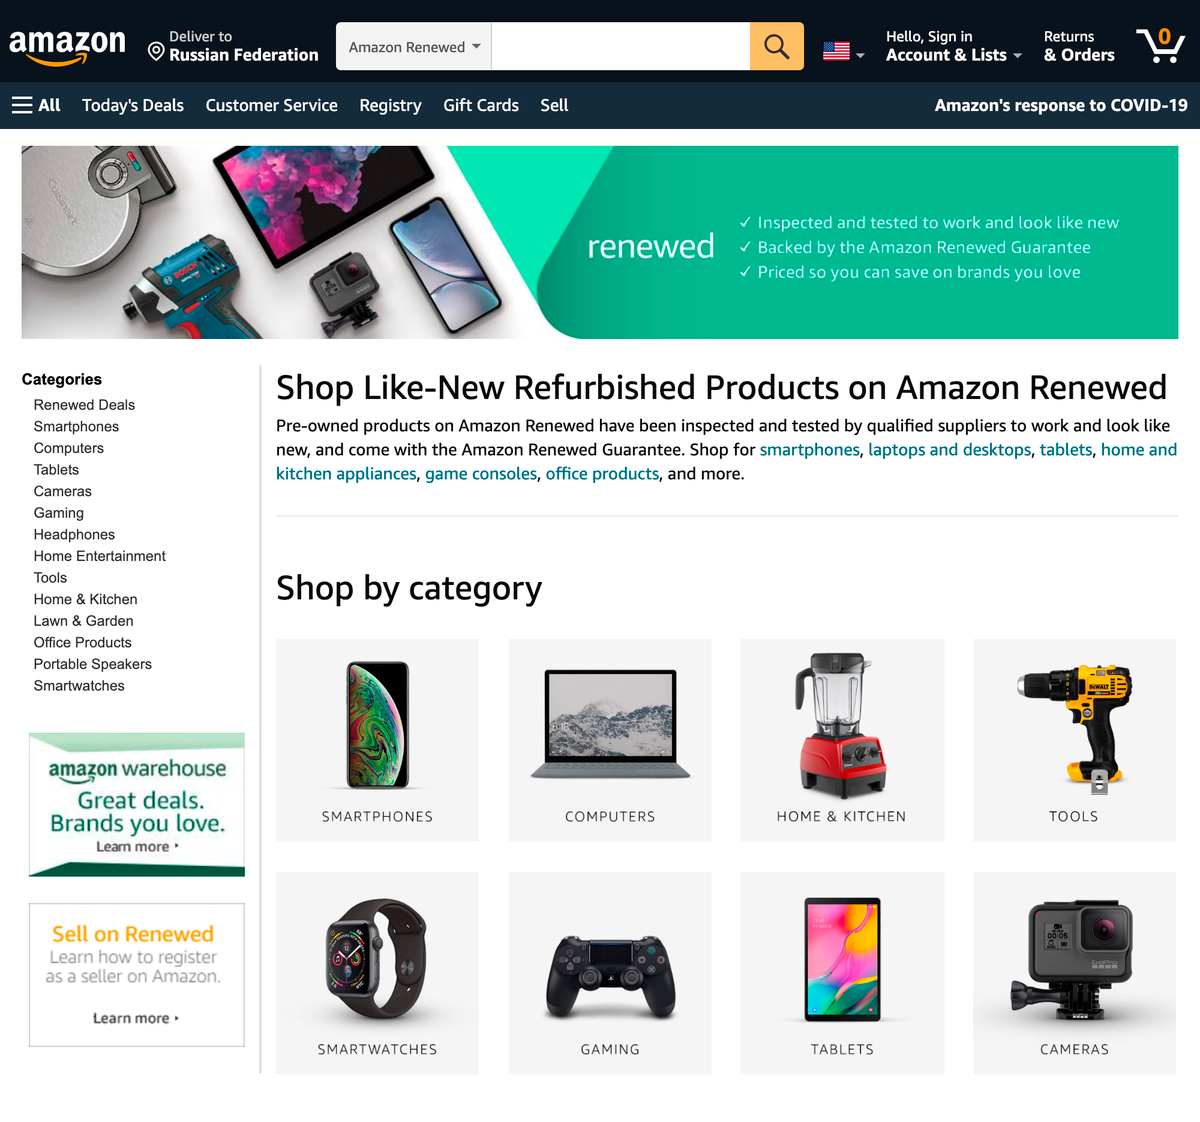 Главная страница Amazon Renewed. Источник: amazon.com